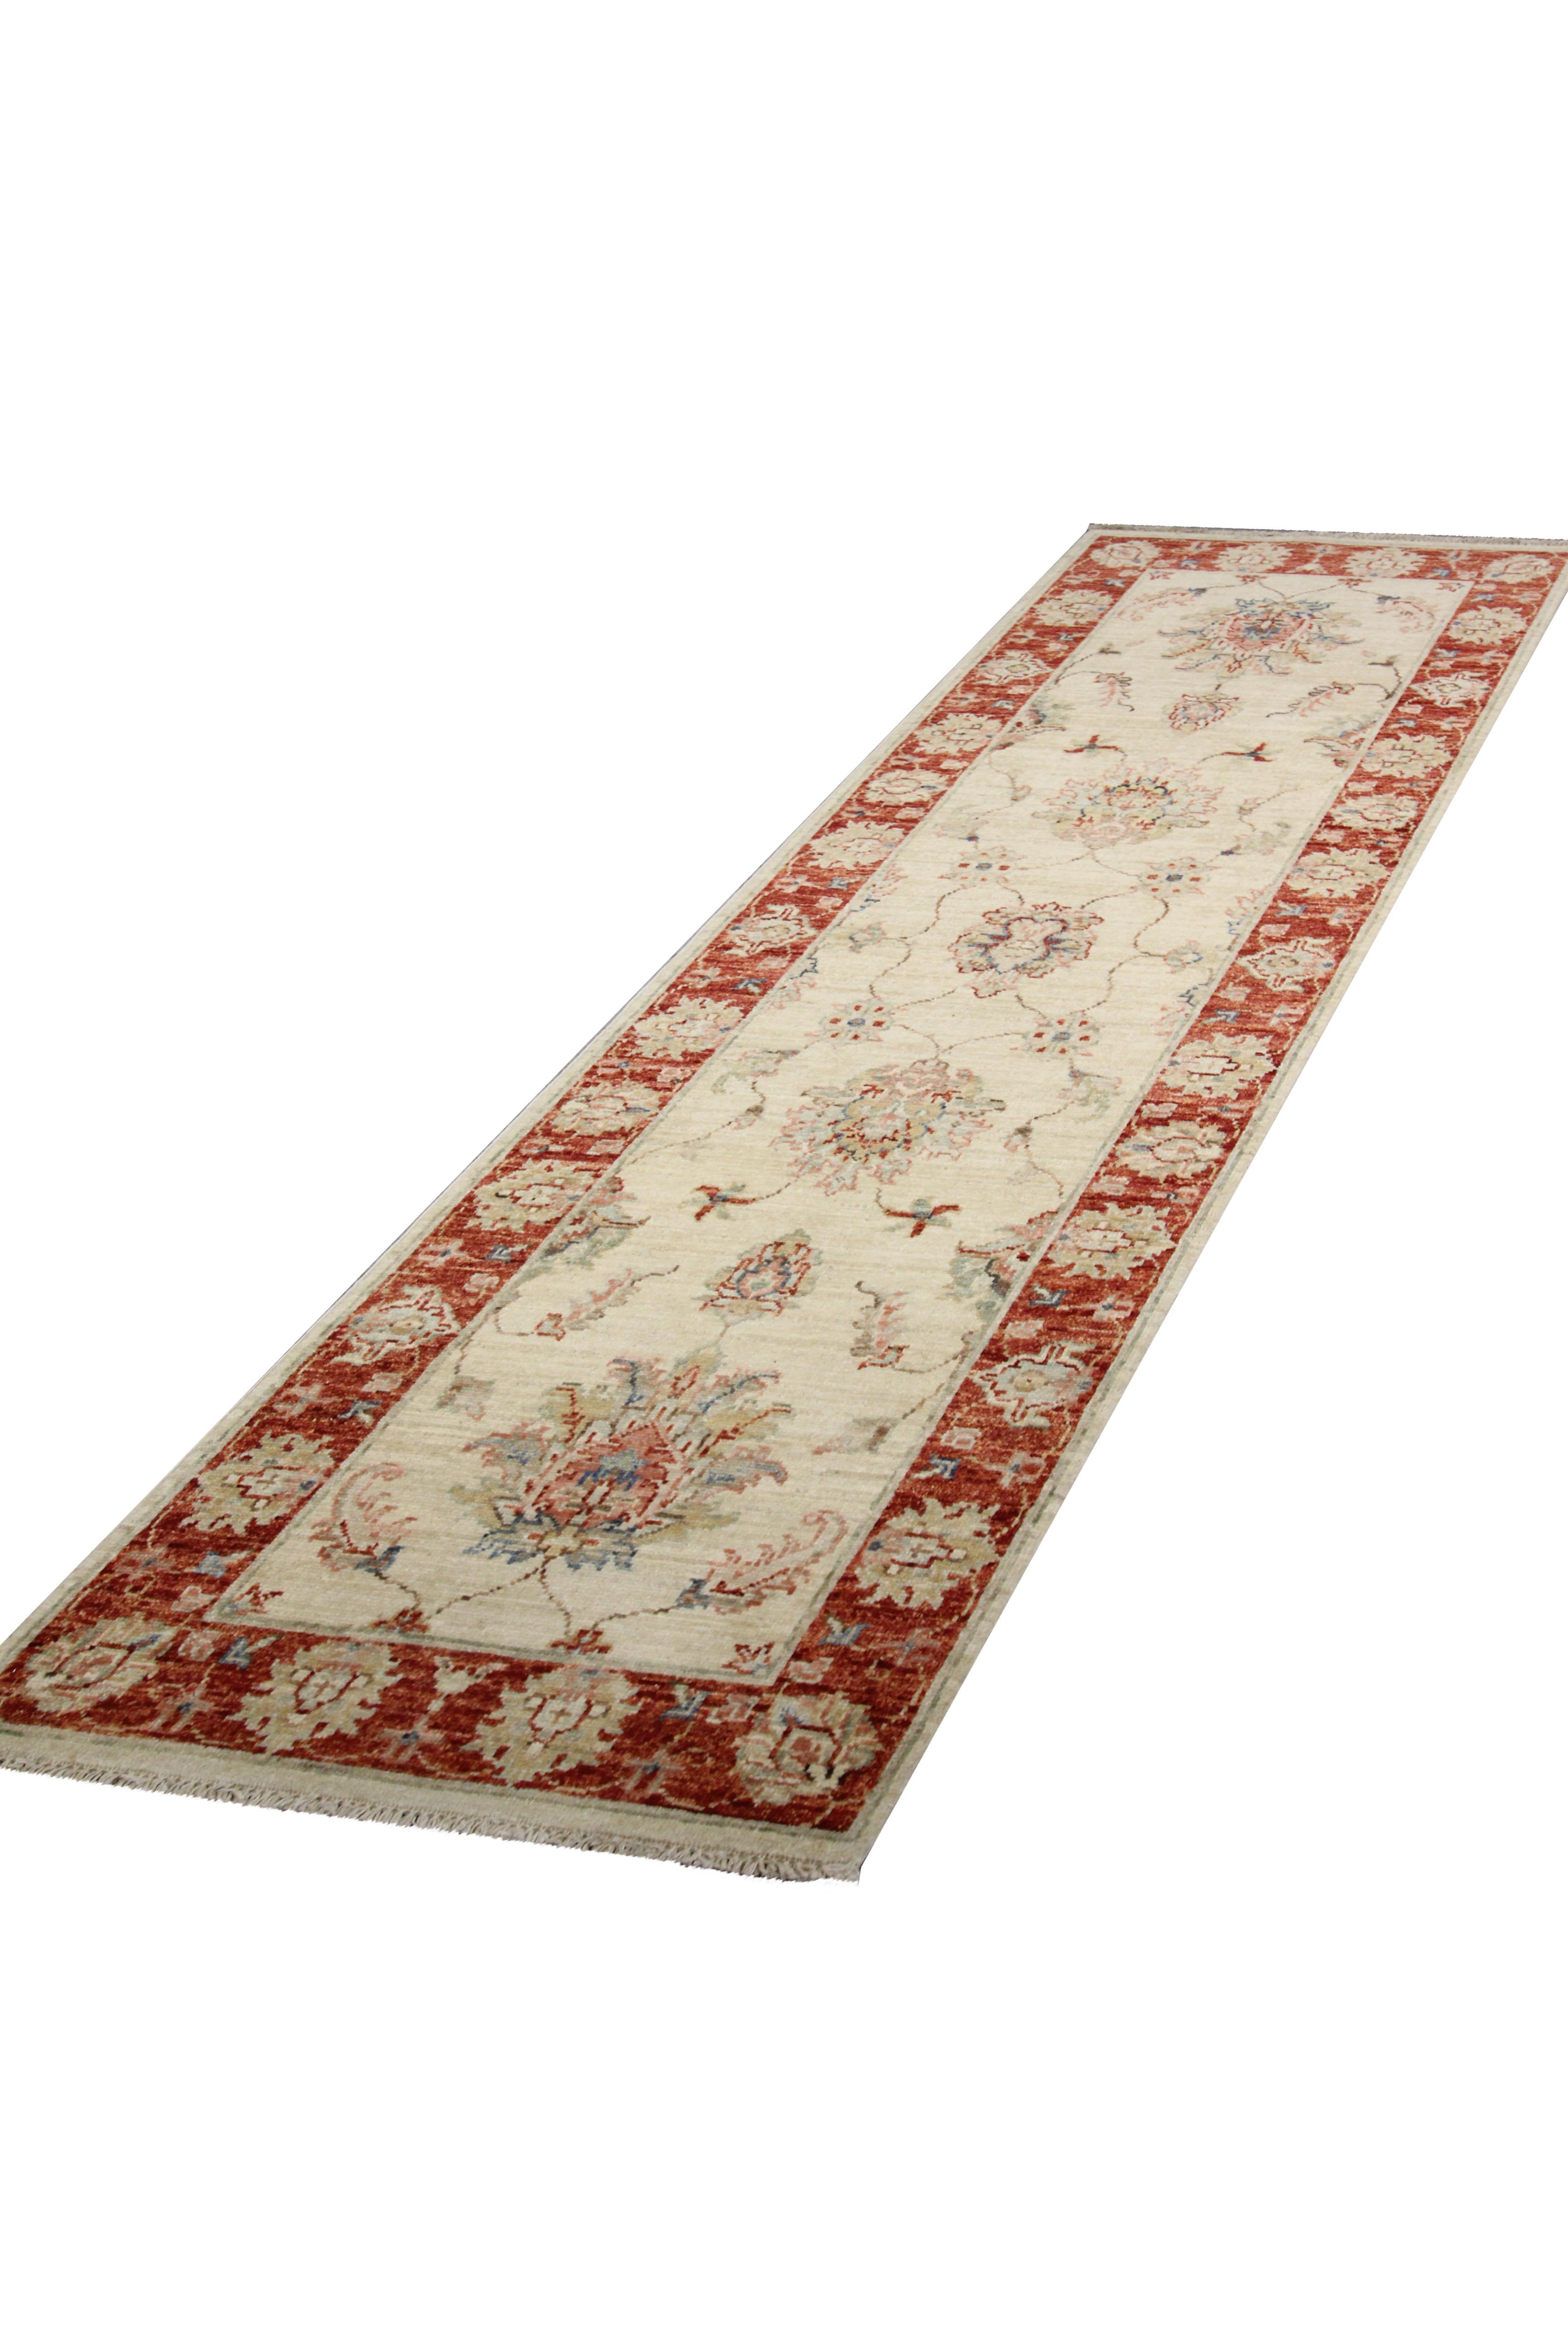 Bohemian Modern Rug Cream Wool Ziegler Runner Handwoven Oriental Wool Carpet